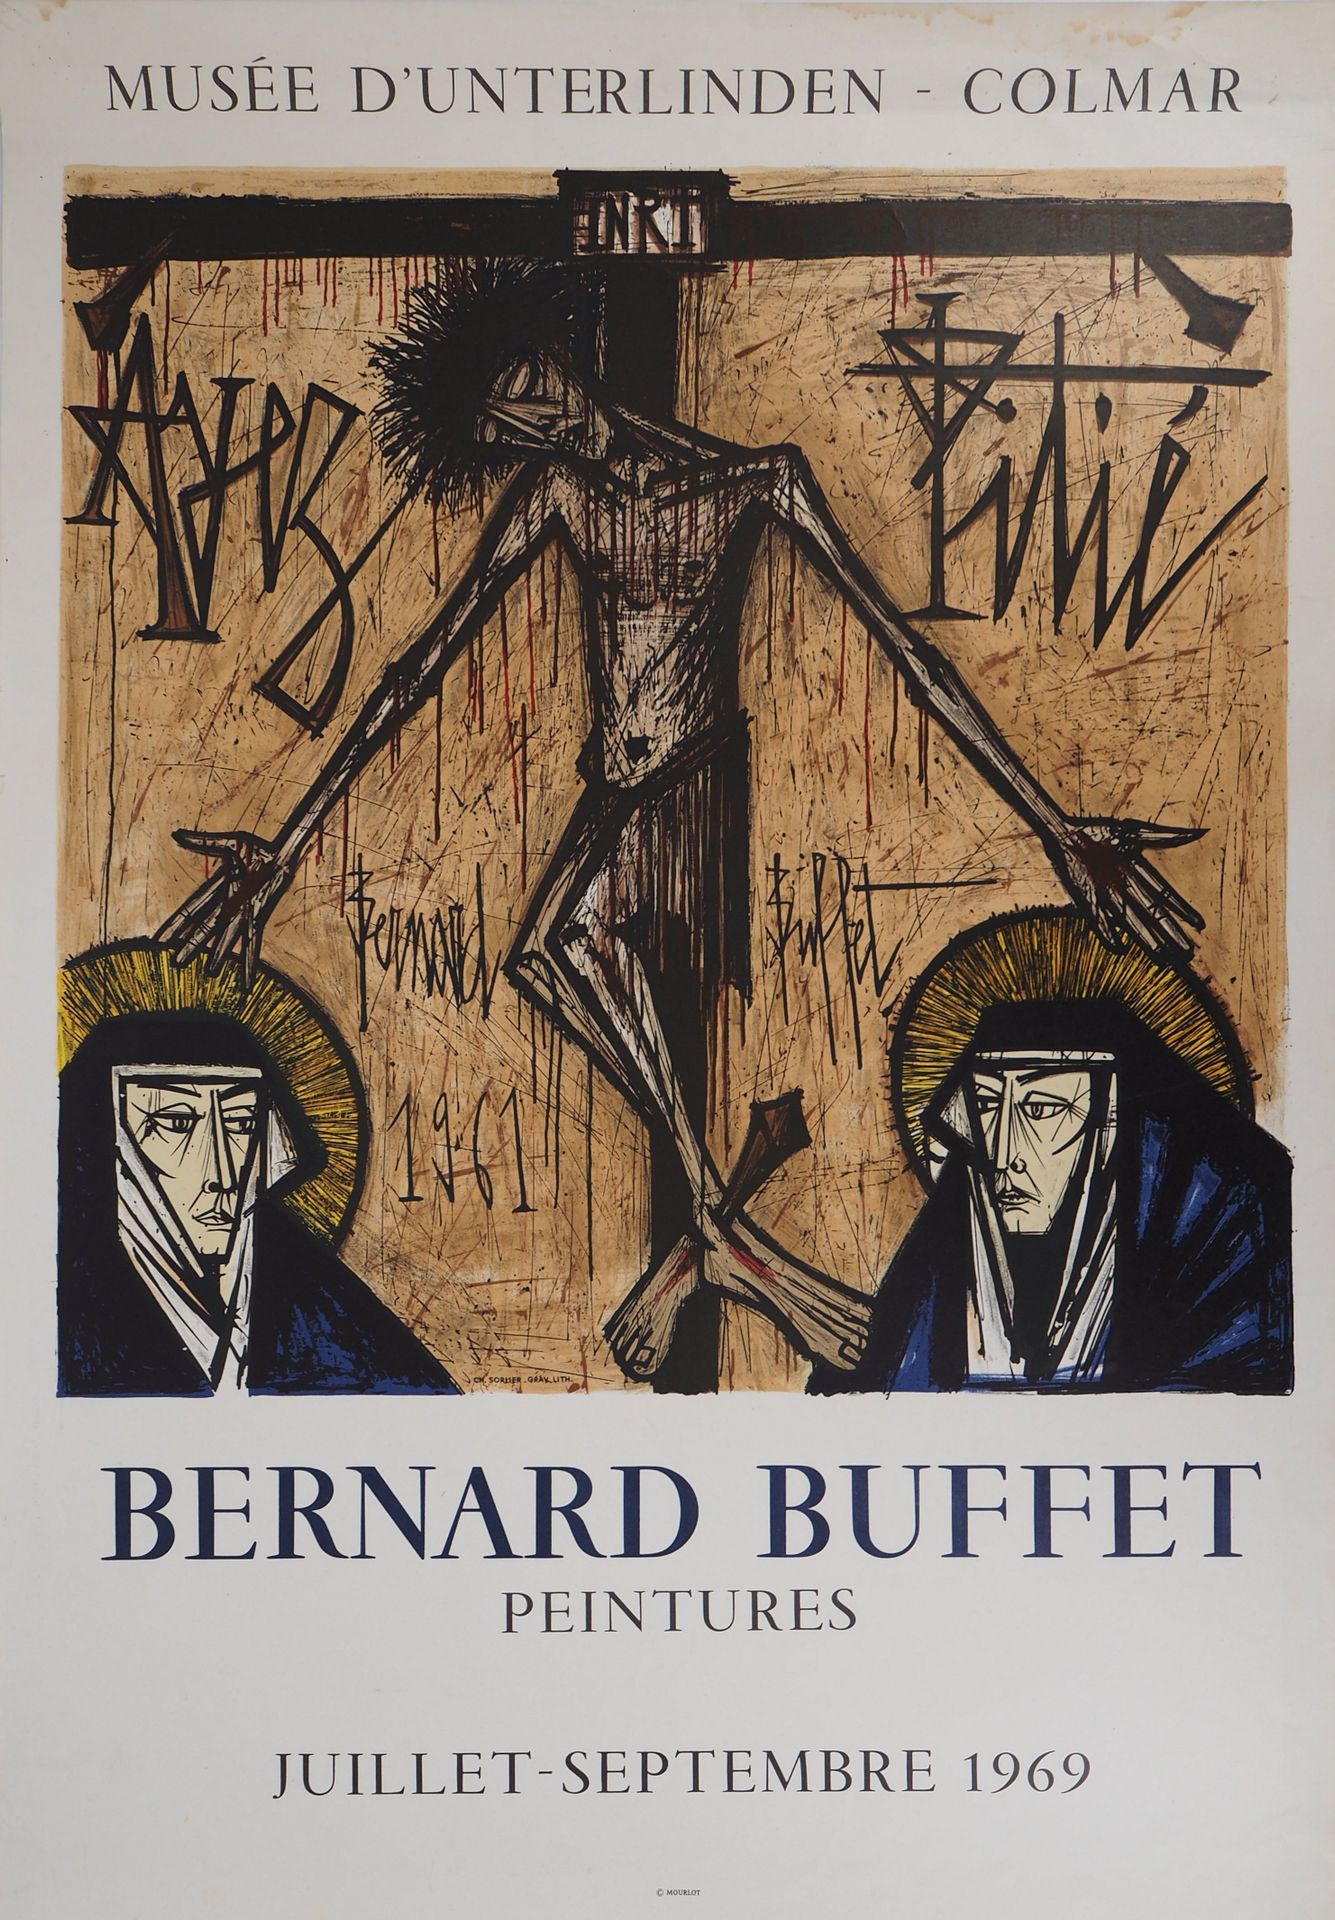 Bernard Buffet 伯纳德-布费特

怜悯吧，1969年

彩色石版画

板块中的签名

查尔斯-索里埃镌刻的石头

在Mourlot工作室印刷

纸&hellip;